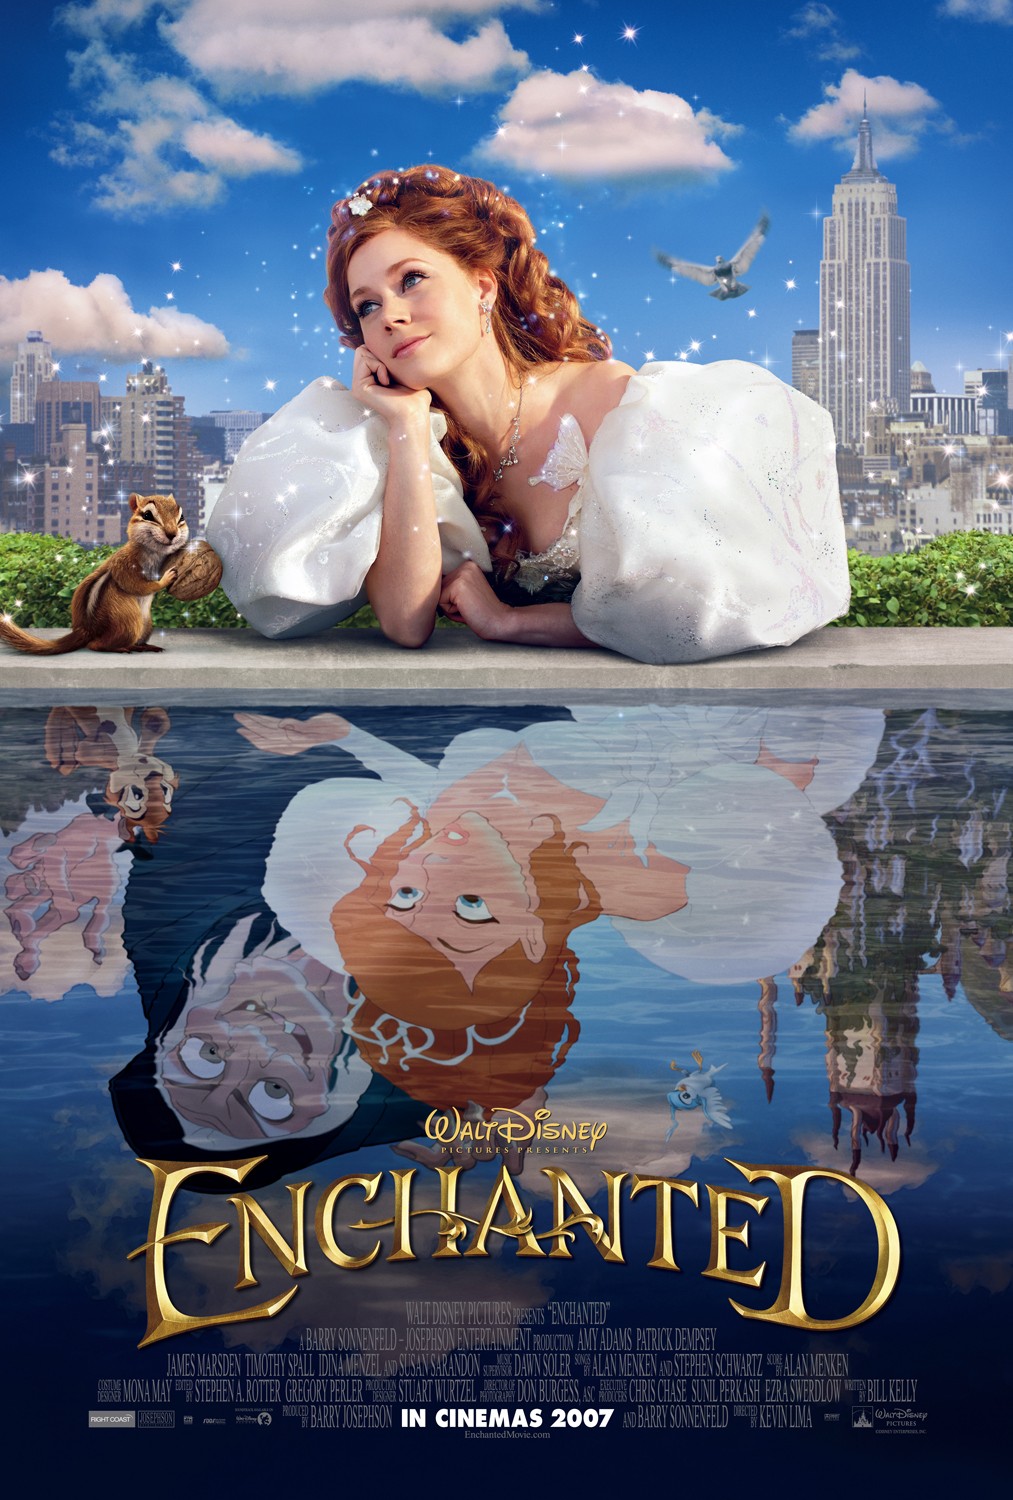 Enchanted A Disney Princess Movie with a Twist!